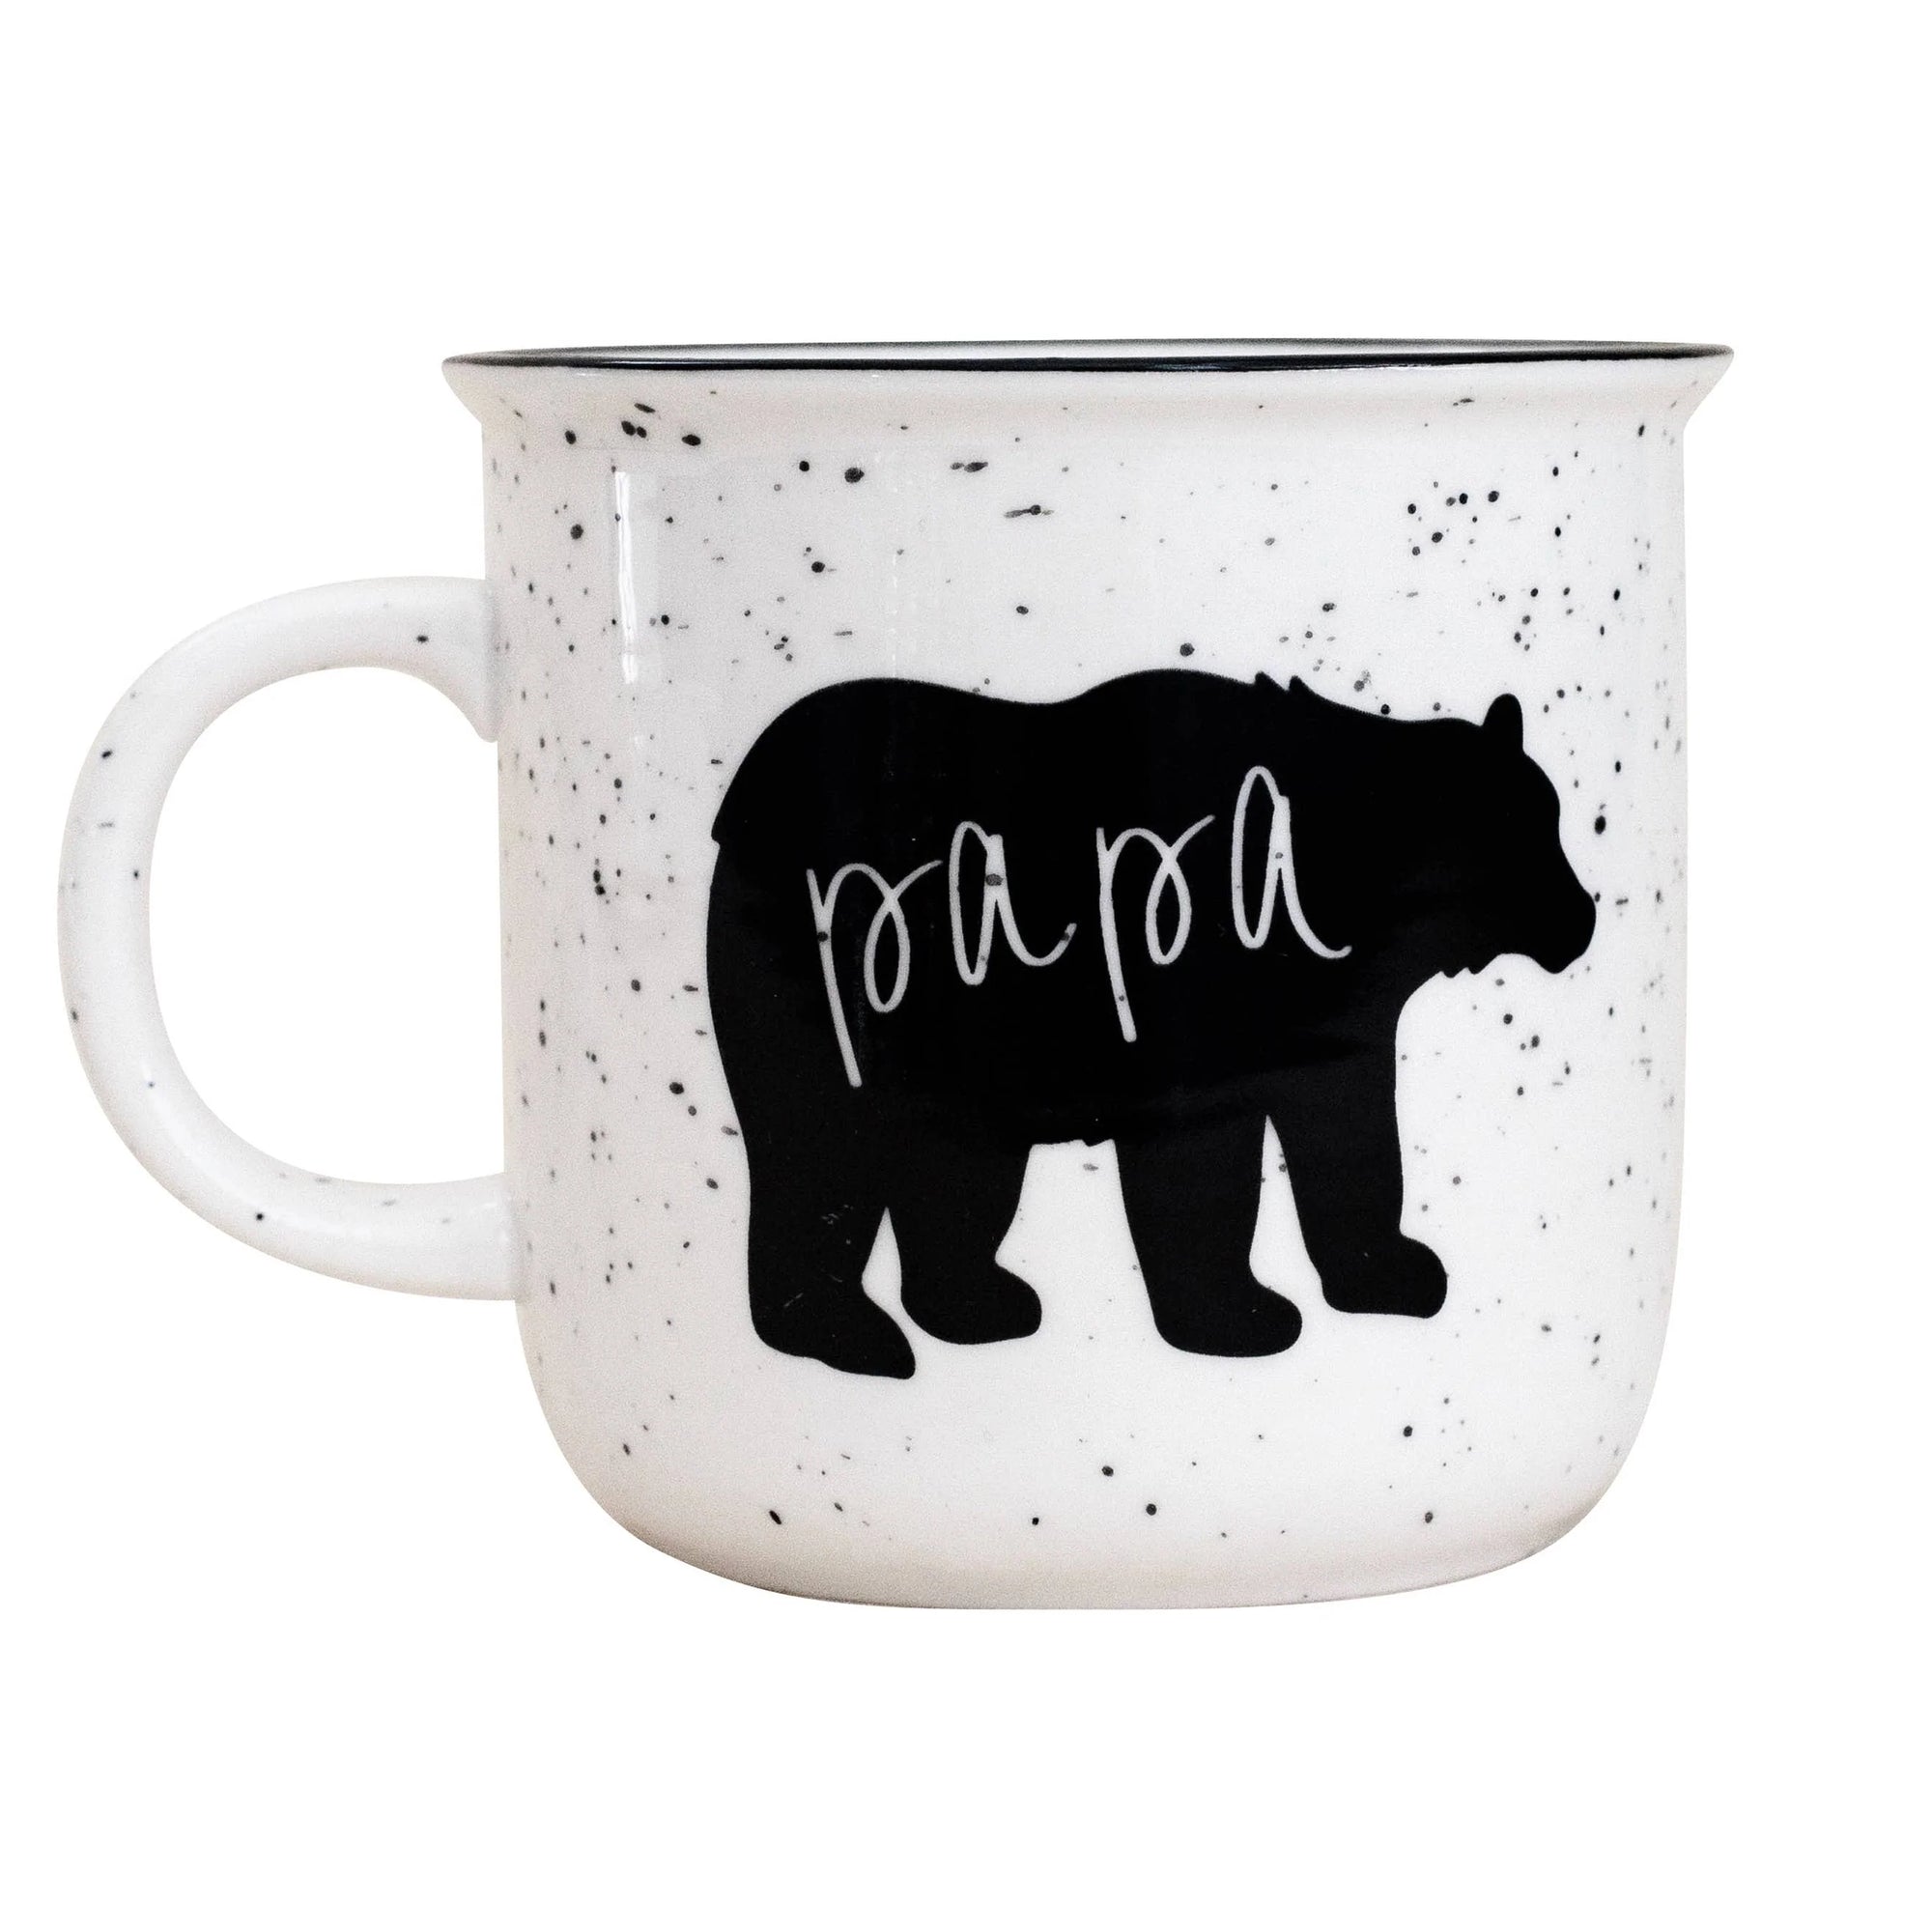 Papa Bear or Mama Bear Personalized Coffee Mug